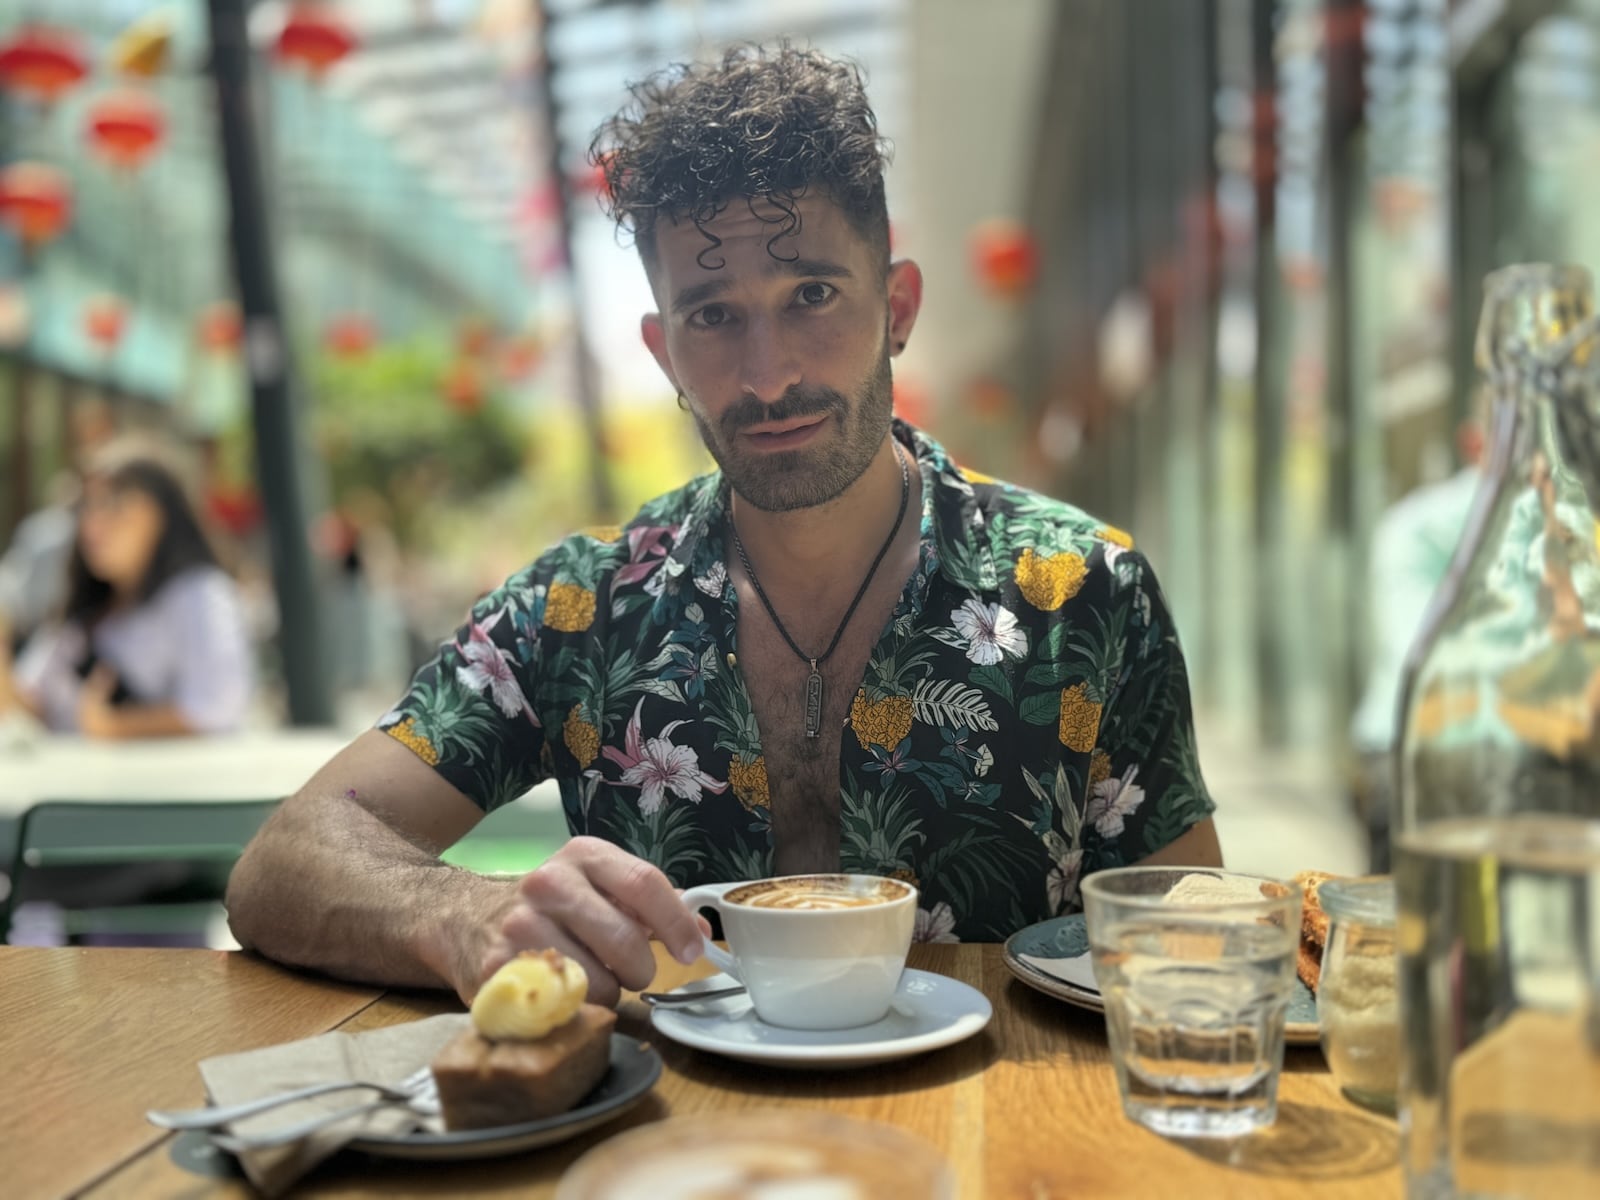 Stefan drinking delicious coffee in Melbourne.